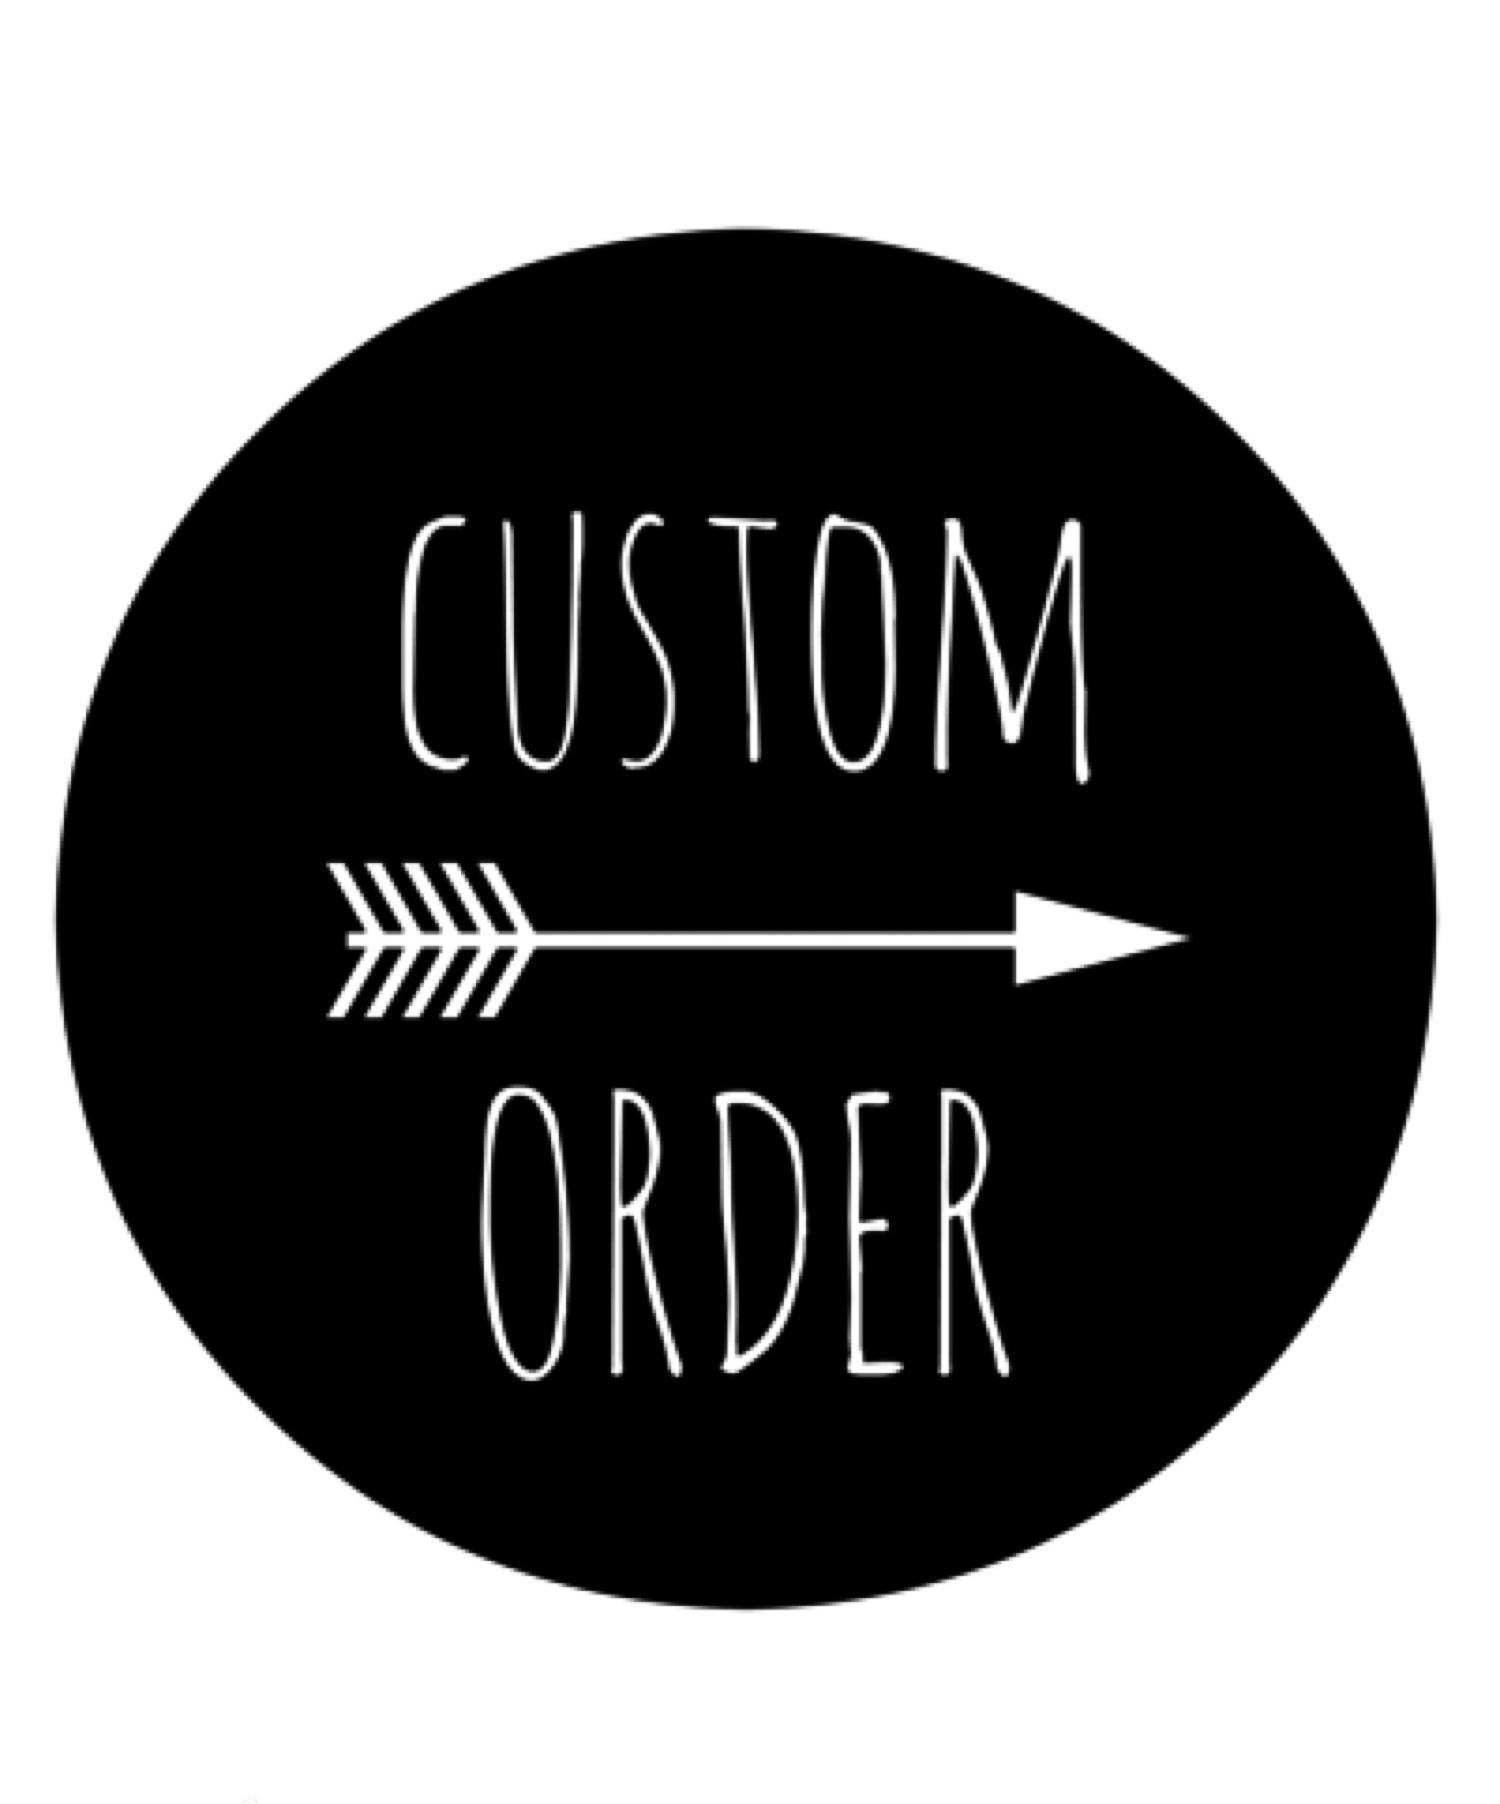 3D Printing Custom Order #6 (60% Payment)